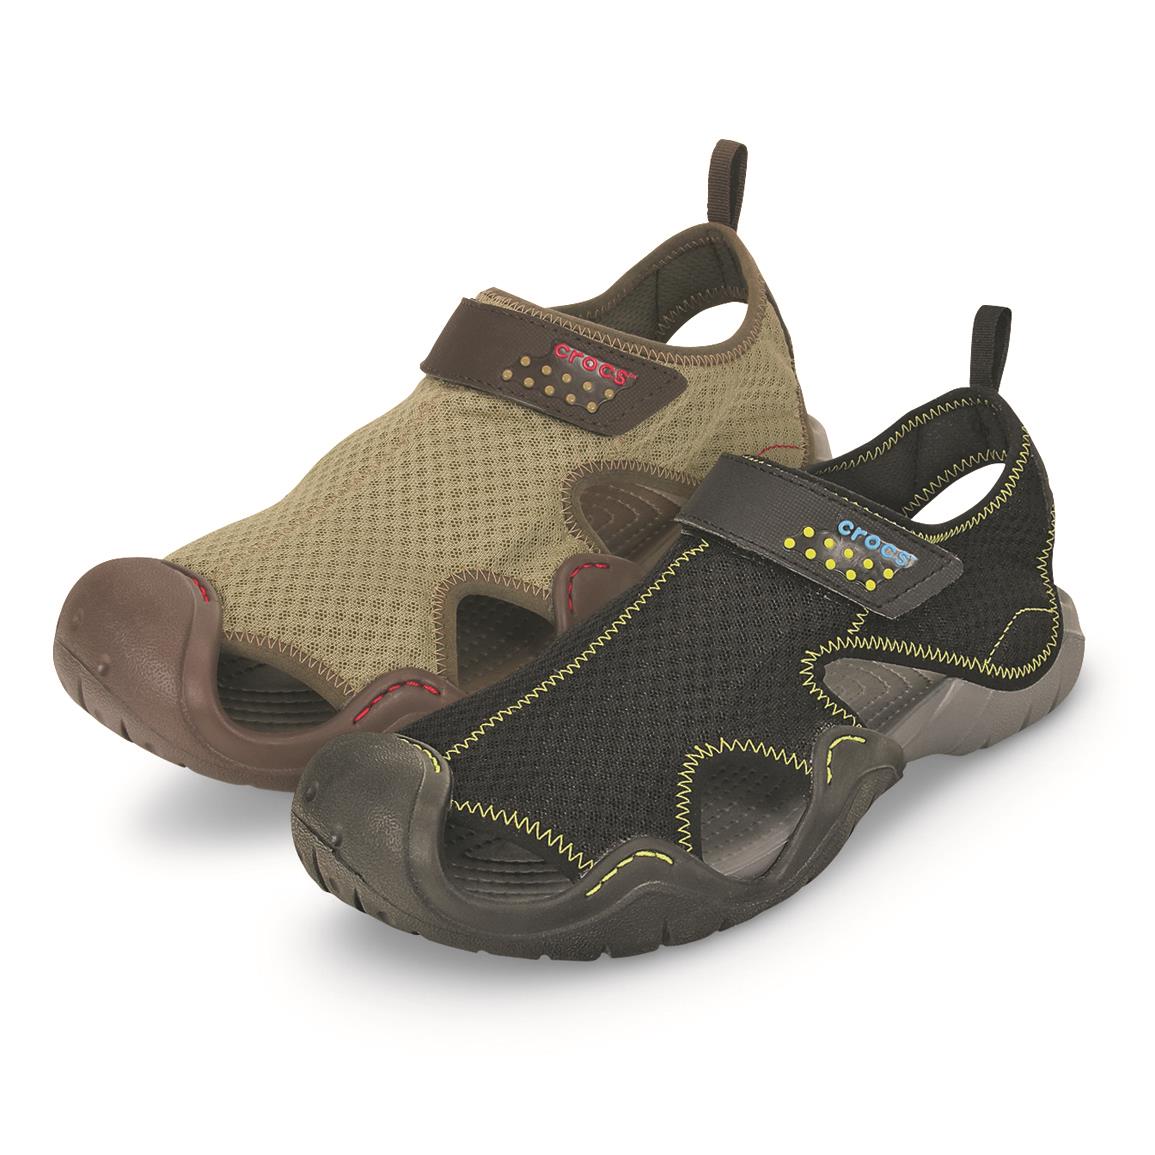  Crocs  Men s  Swiftwater Sandals  620895 Sandals  at 